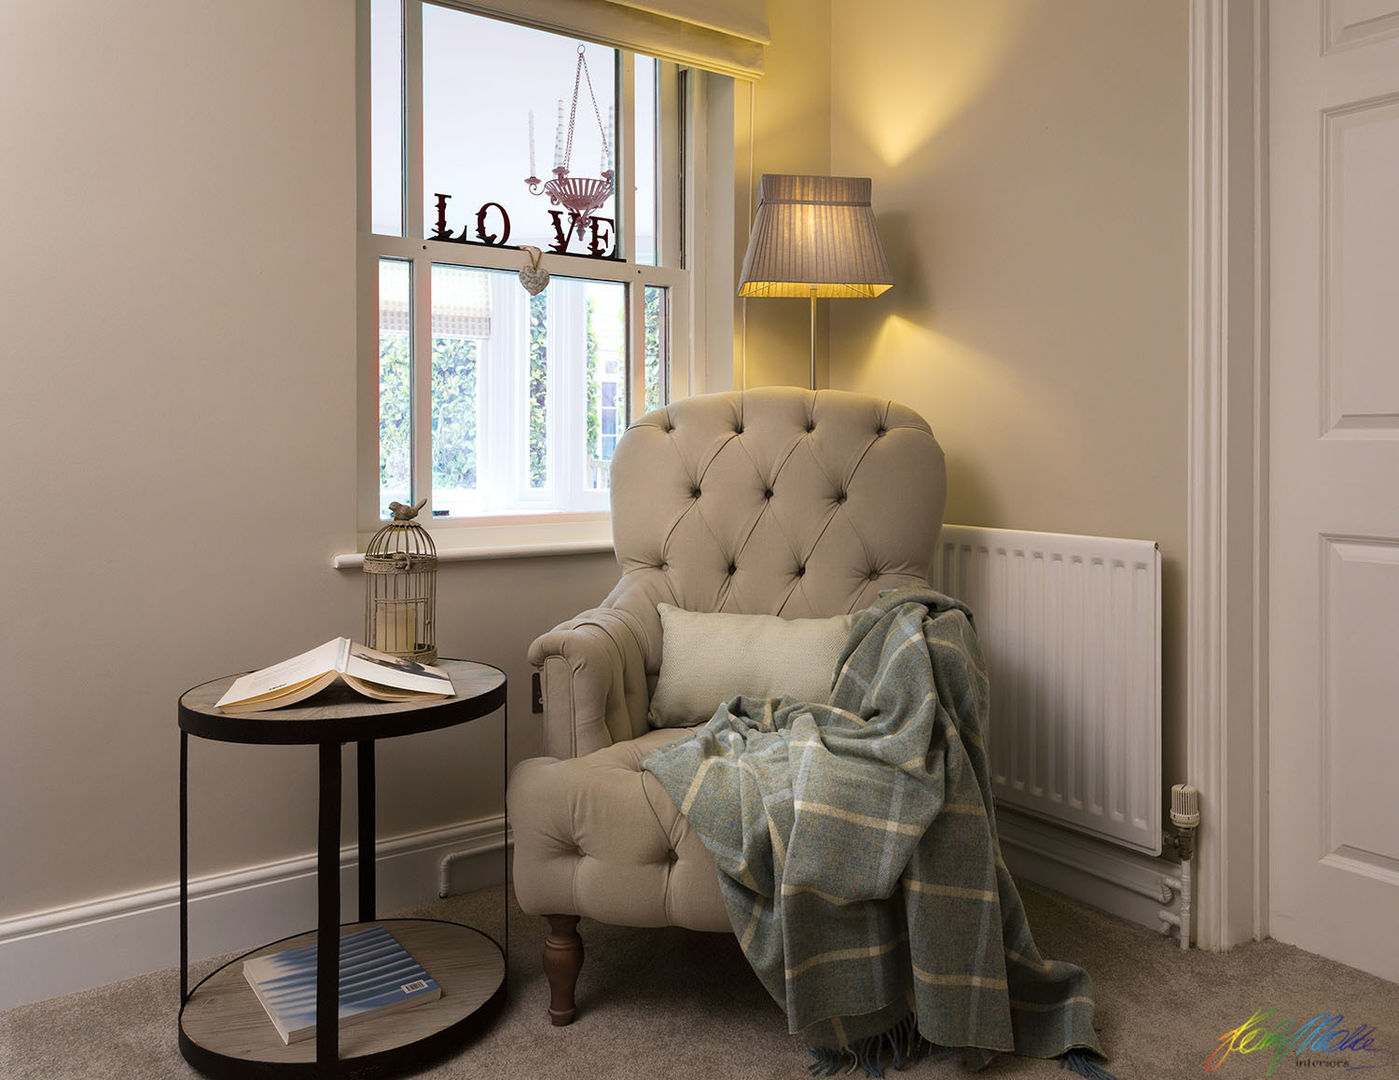 Reading corner with cozy armchair Katie Malik Design Studio Classic style living room